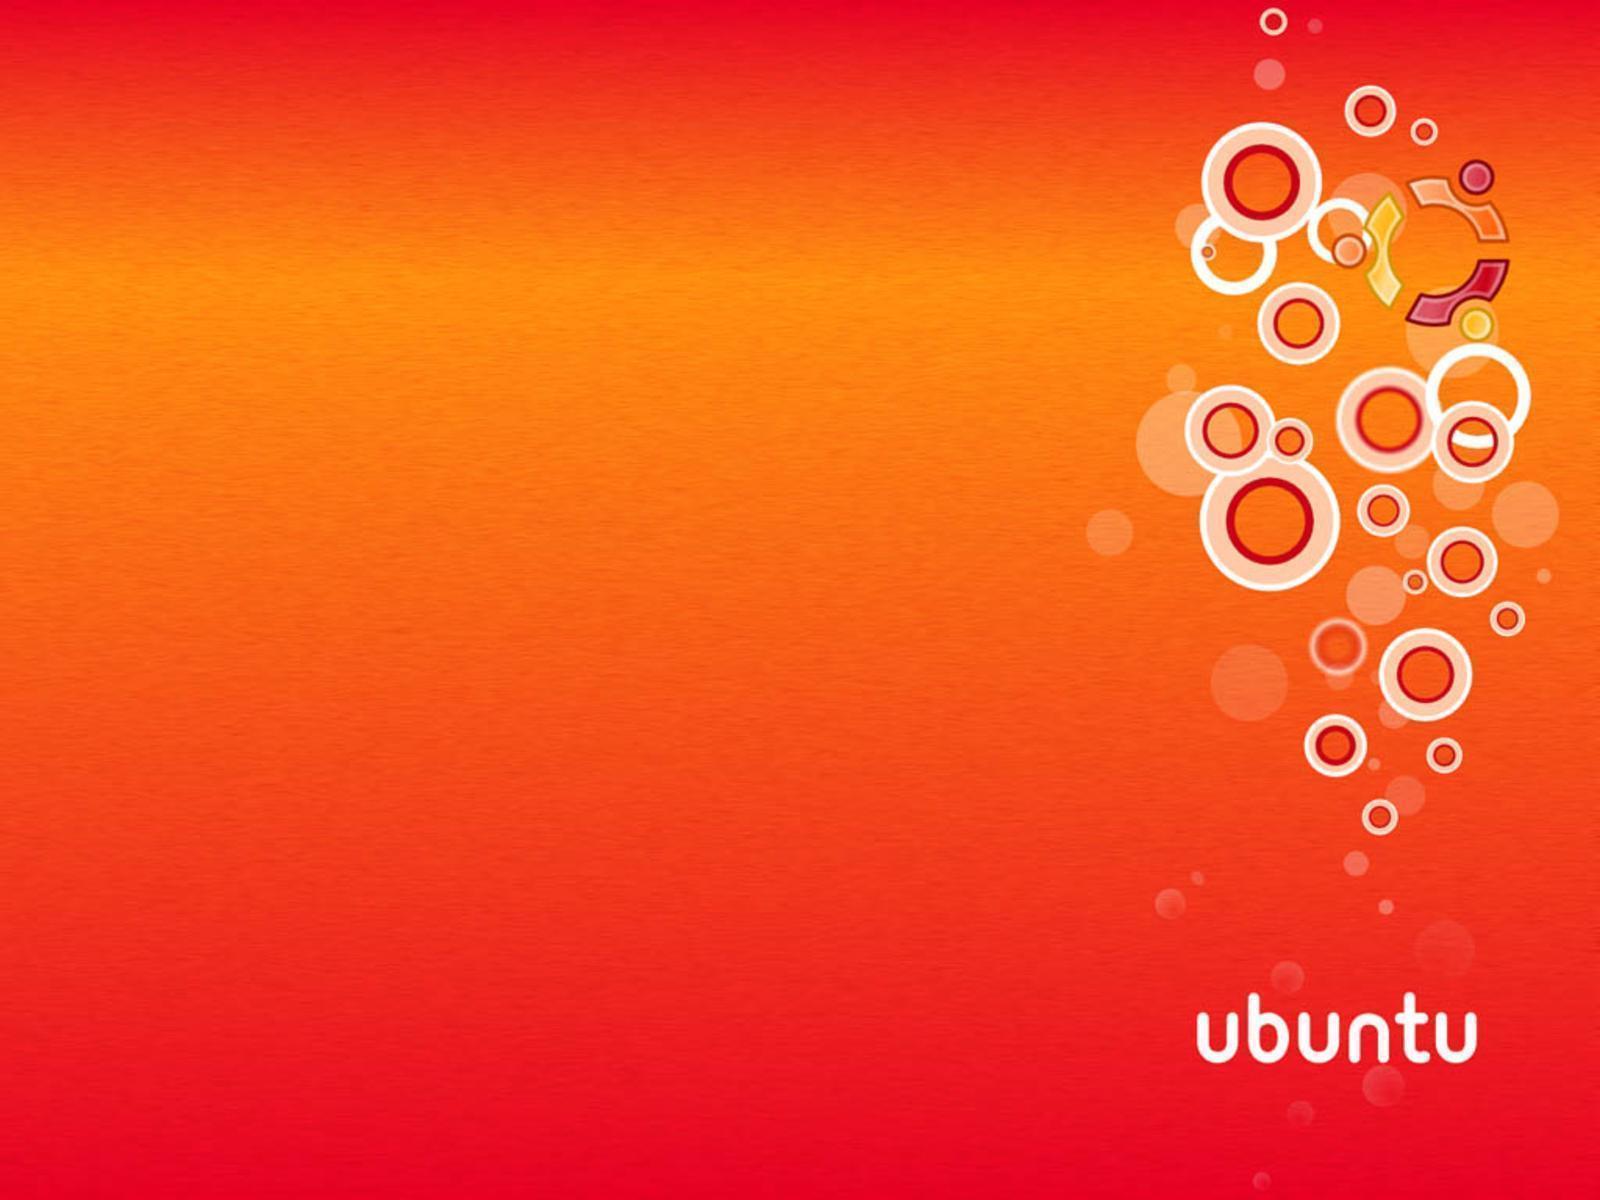 Ubuntu Linux system free desktop background wallpaper image